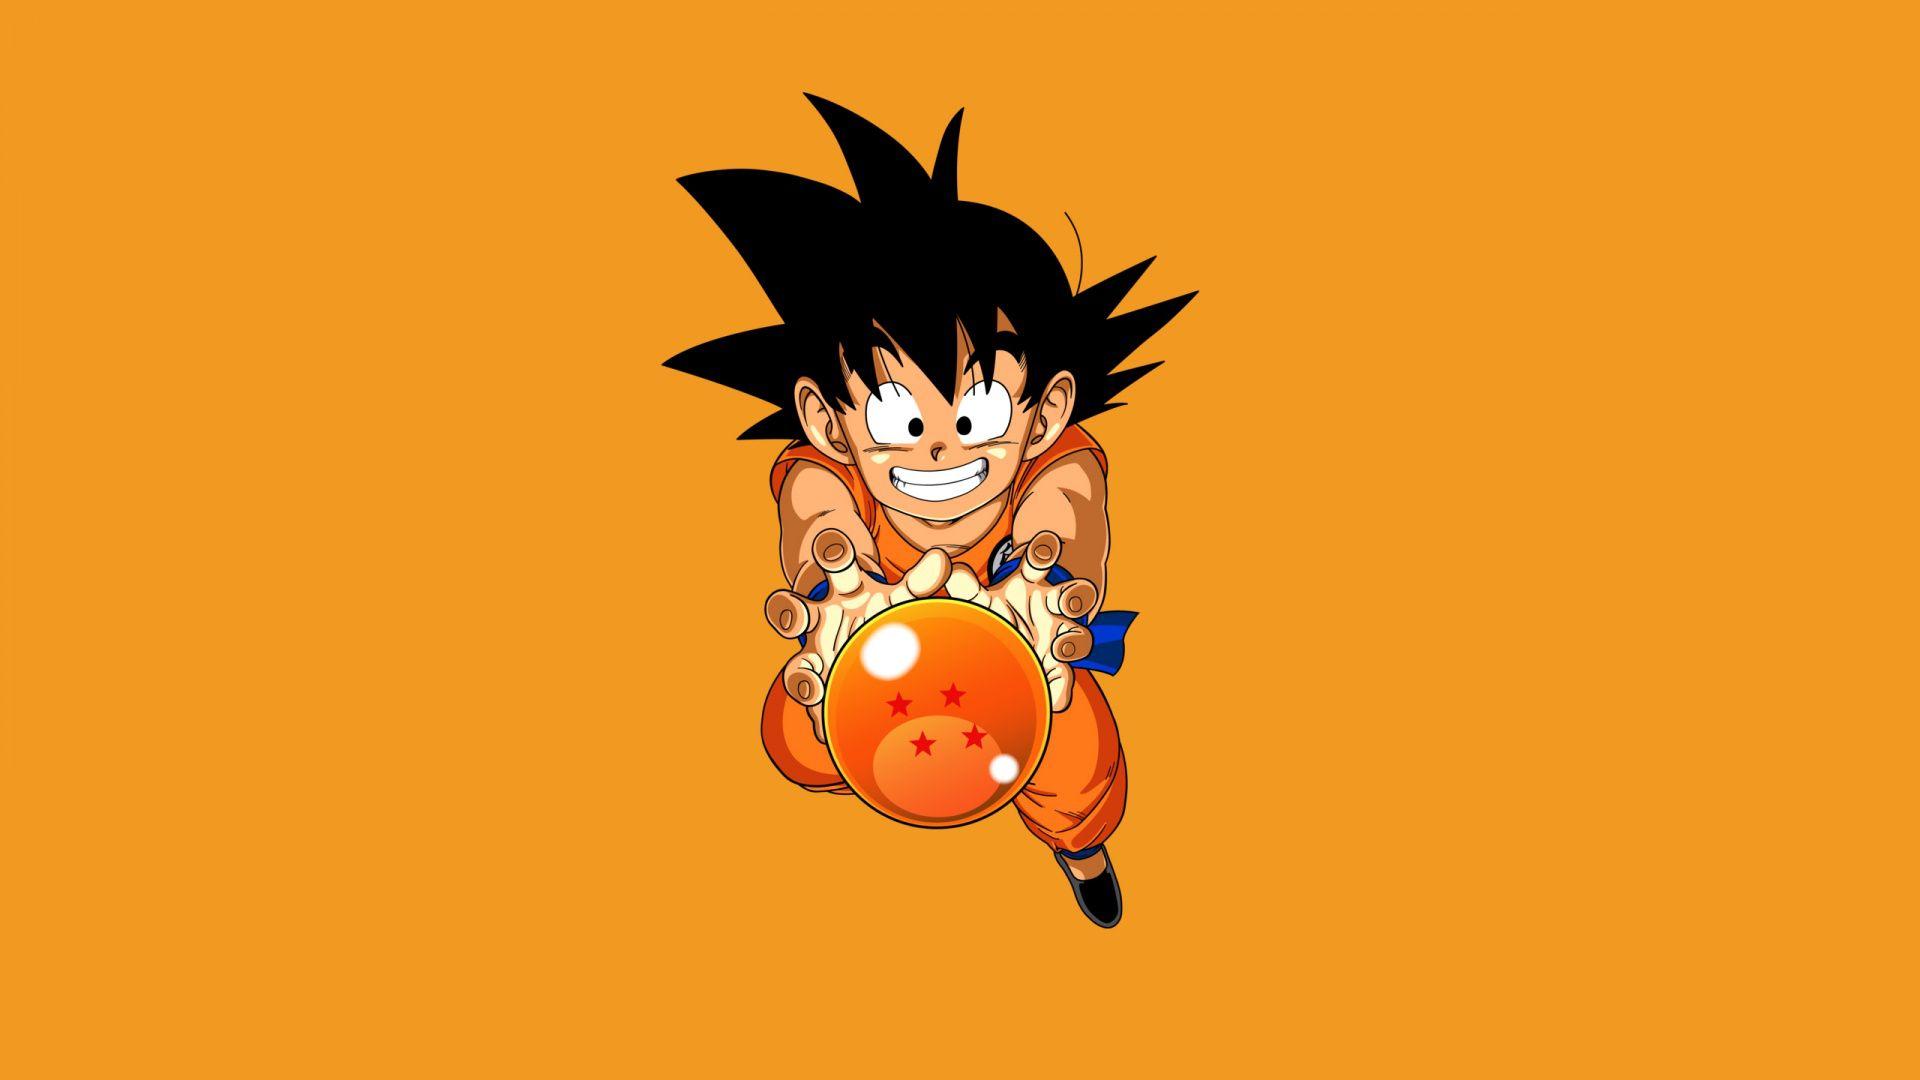 Anime Dragon Ball HD Wallpaper orange ball 1920x1080 #anime